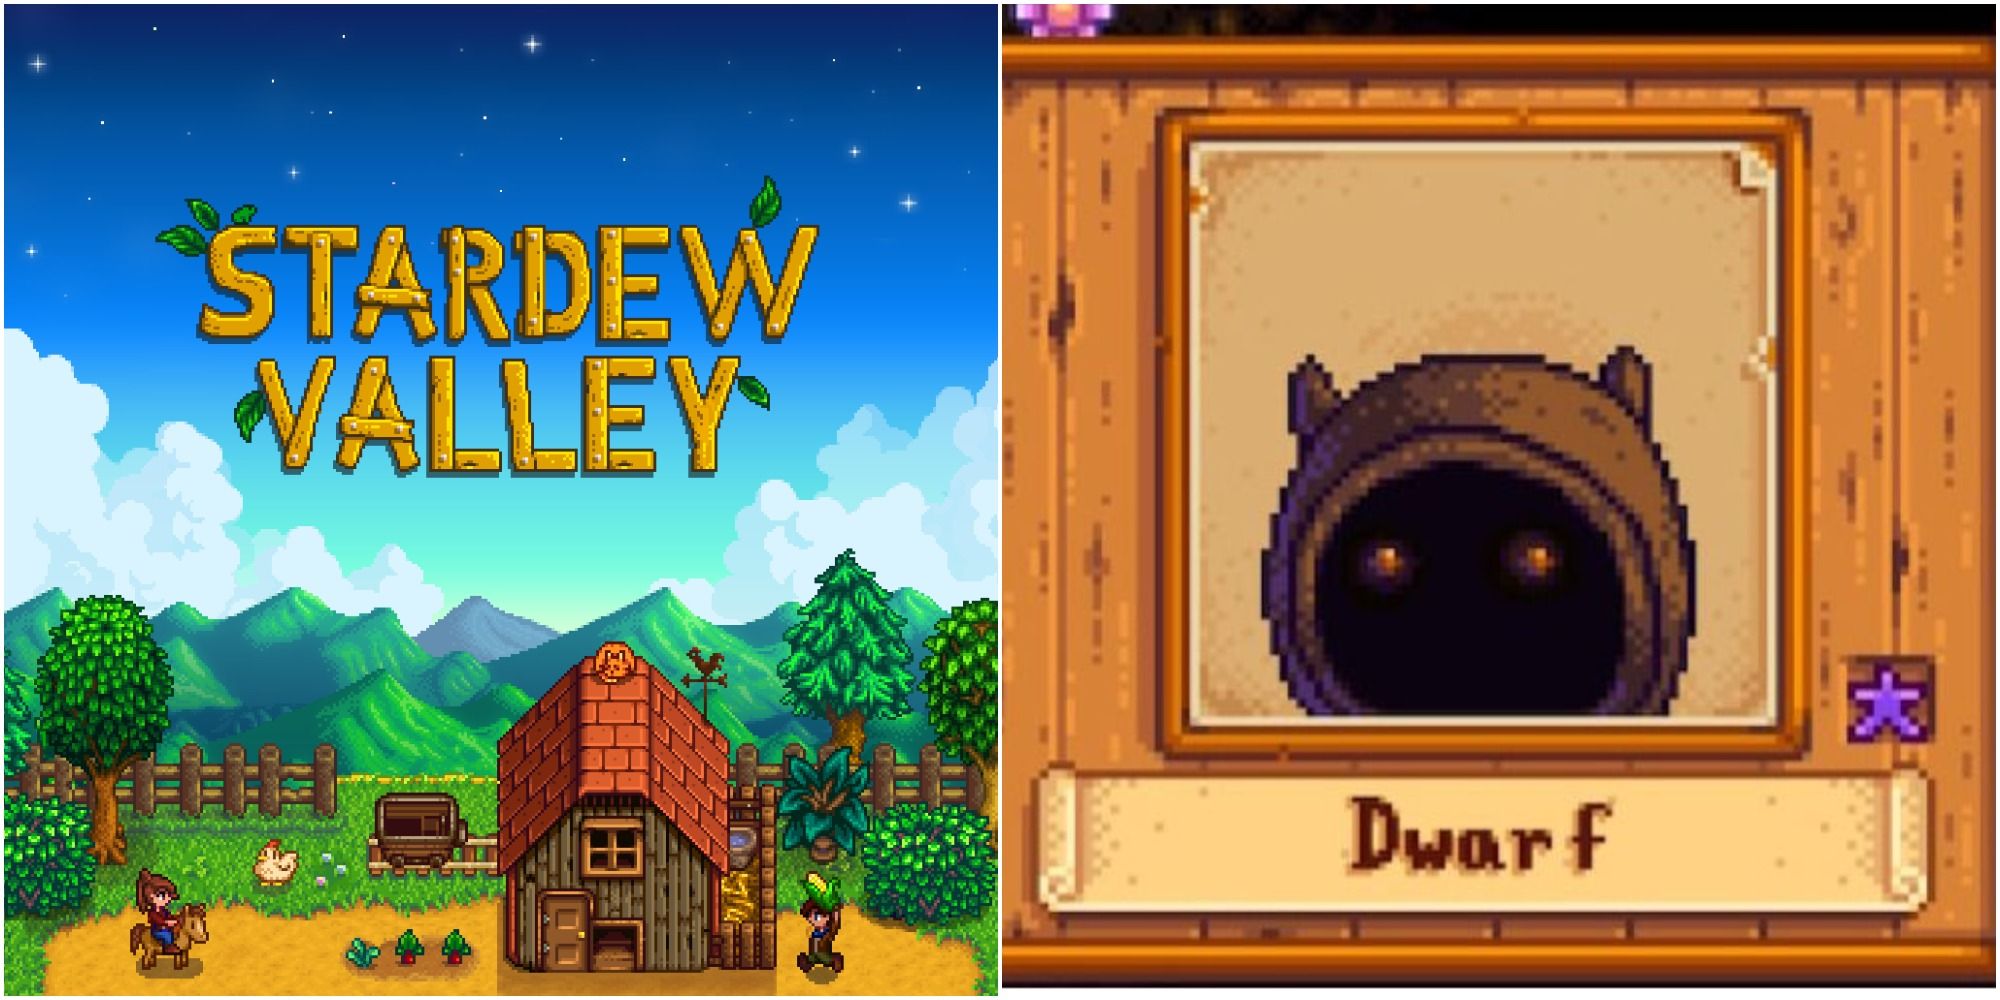 Left: Stardew Valley cover art. Right: Dwarf portrait